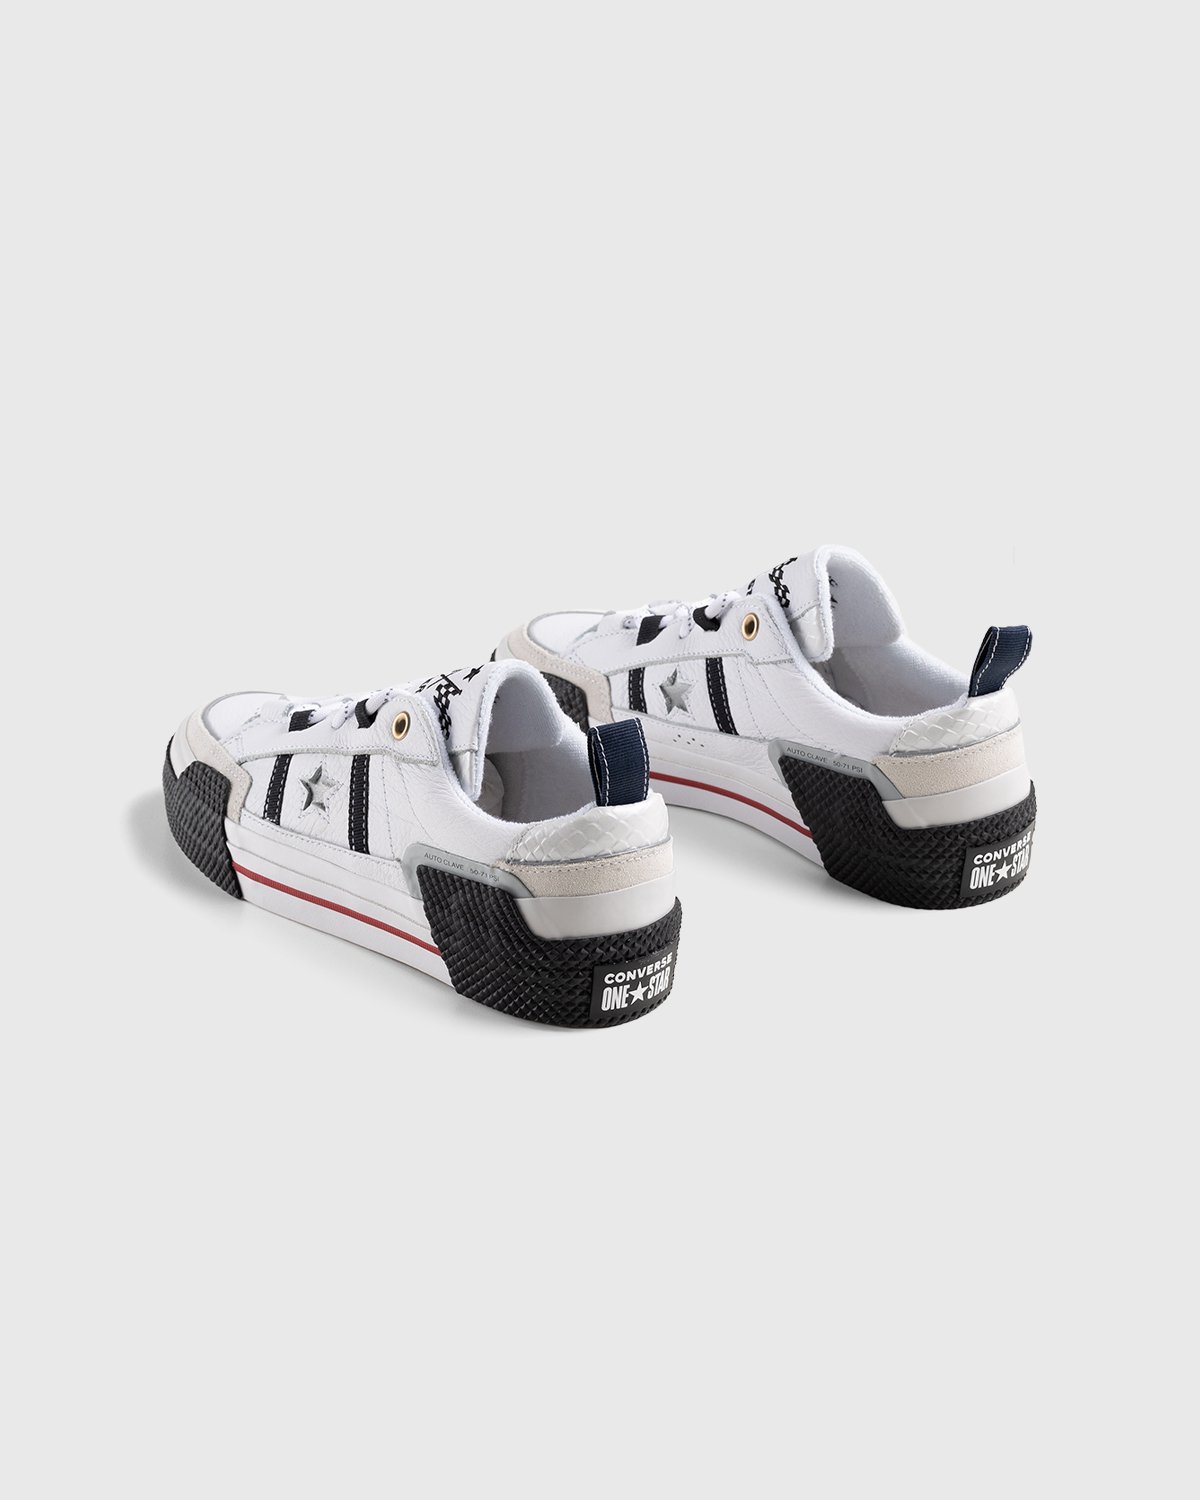 Converse x IBN Japser - One Star Ox White/Black/White - Footwear - White - Image 3